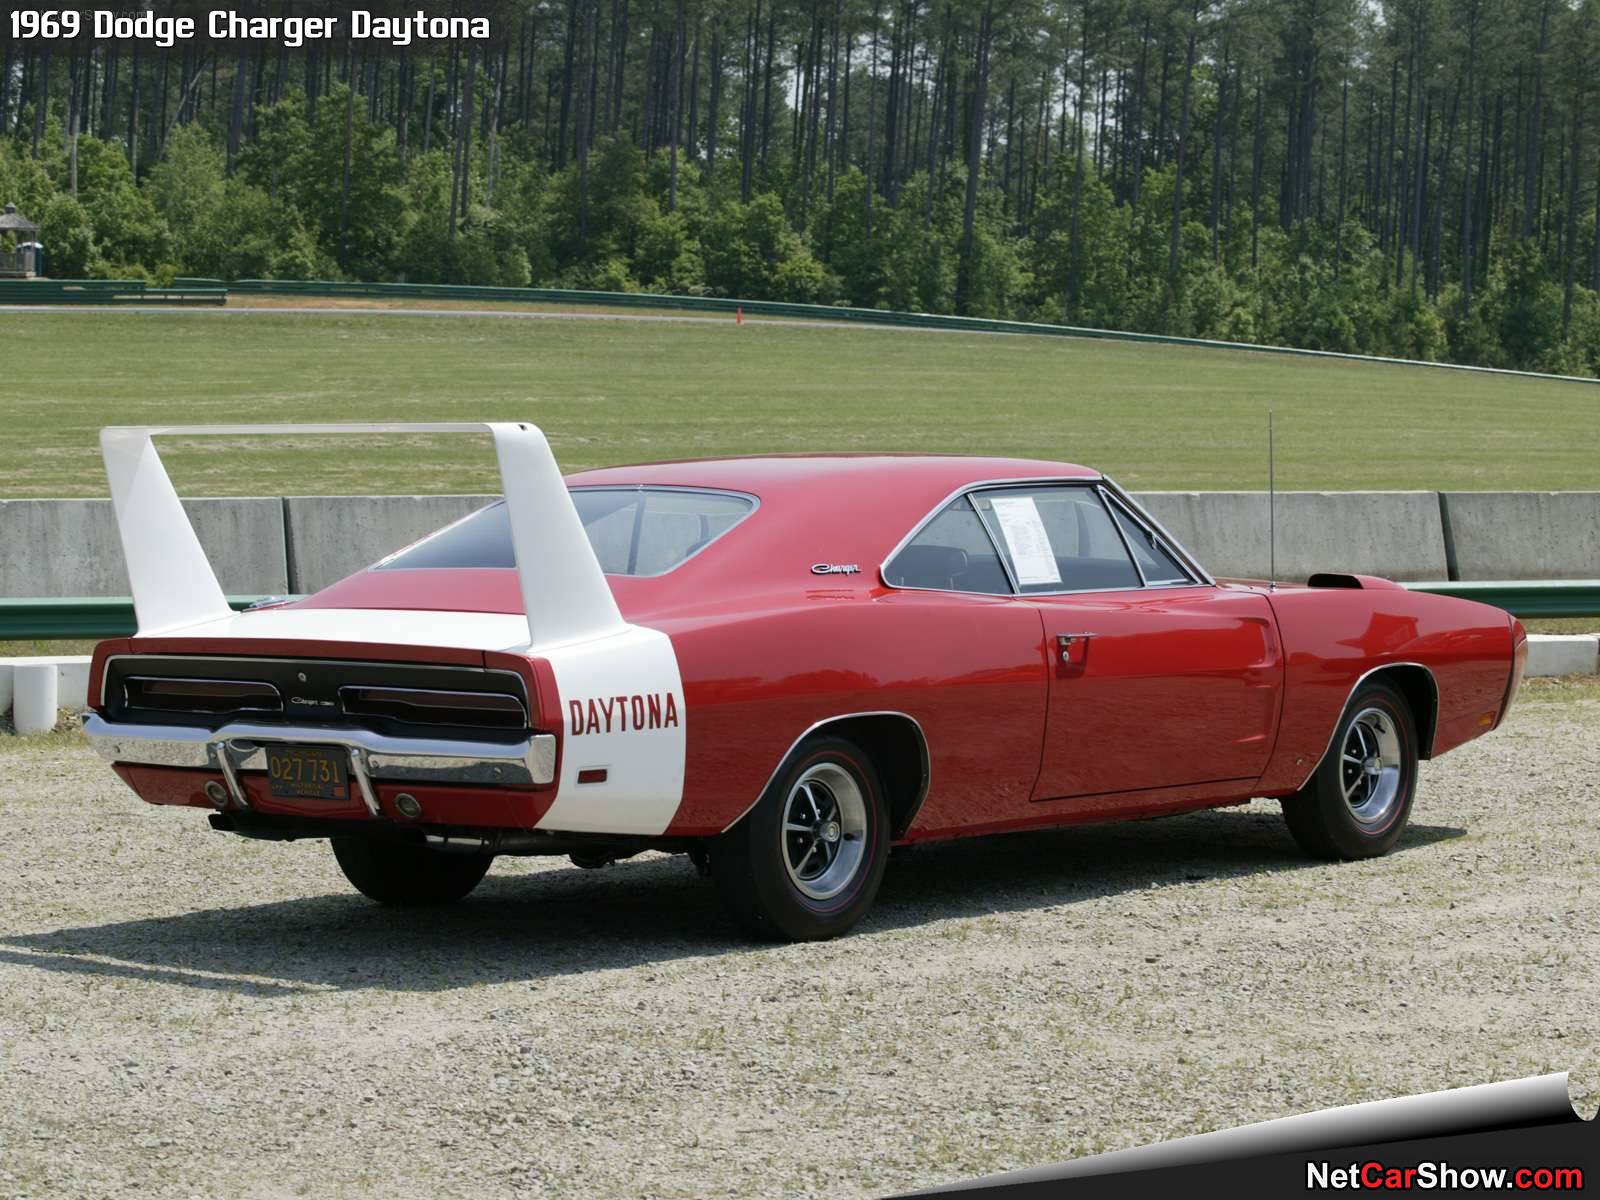 Dodge Charger Daytona: Then